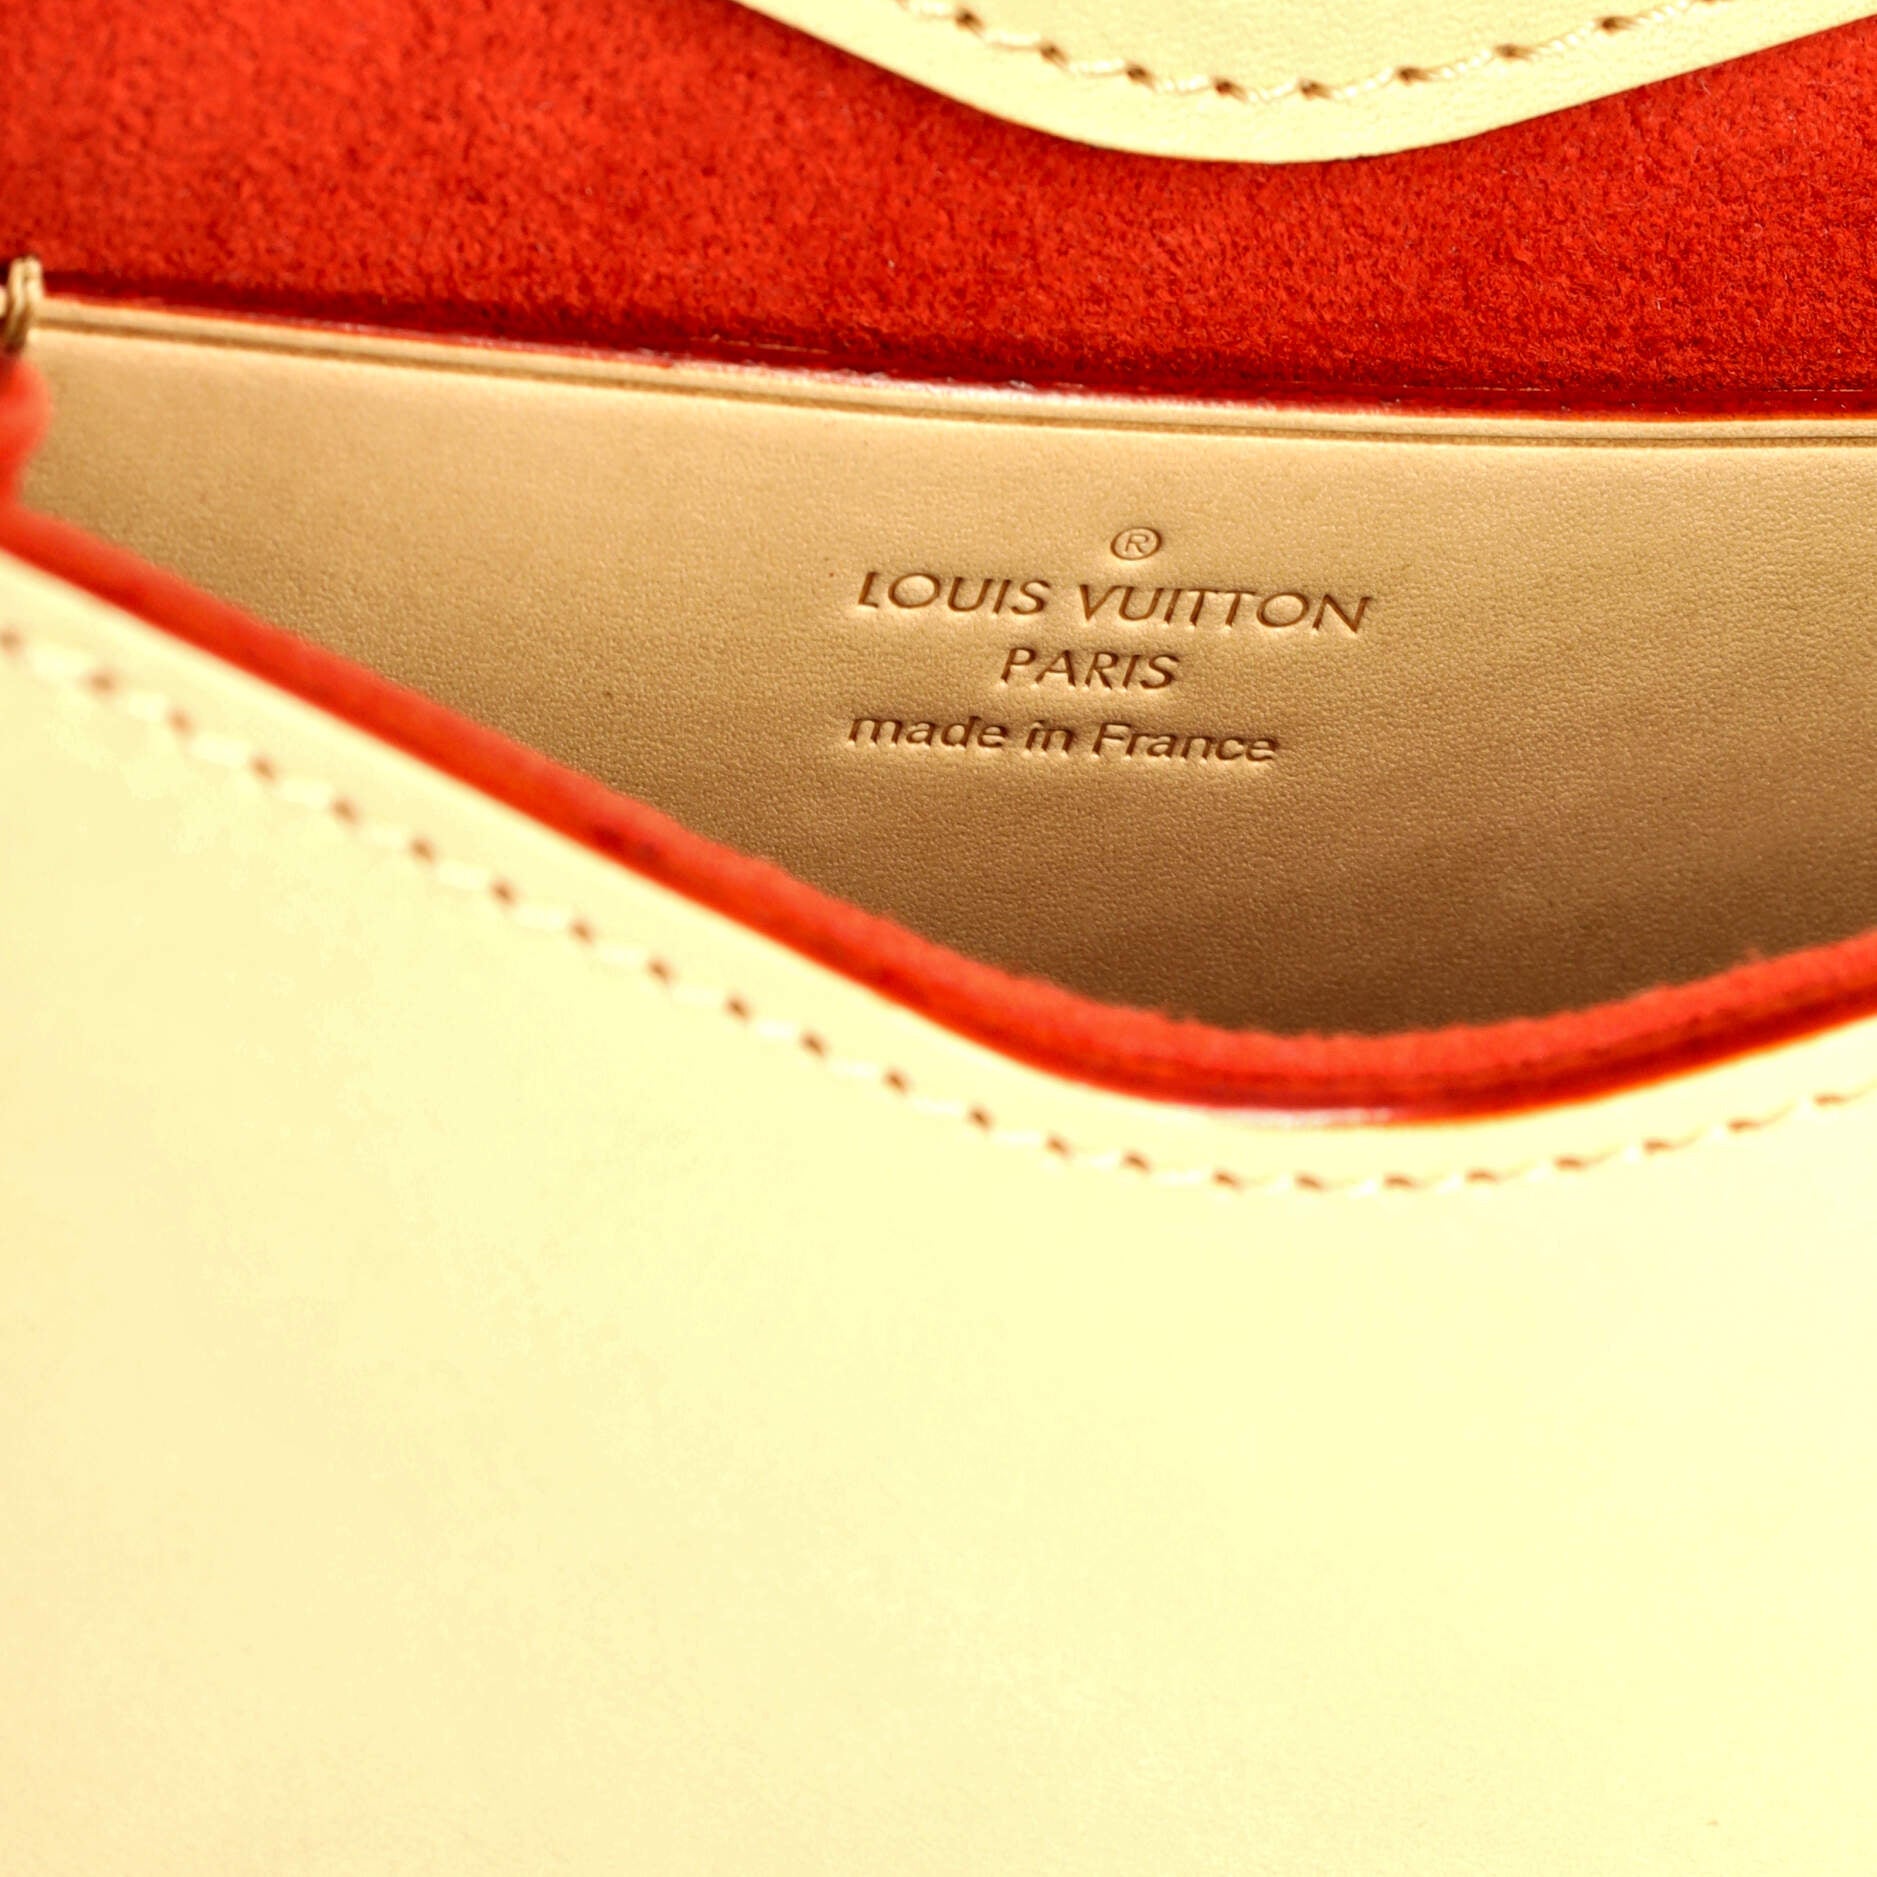 Louis Vuitton Twice Monogram Empreinte crossbody Bag $1599.99